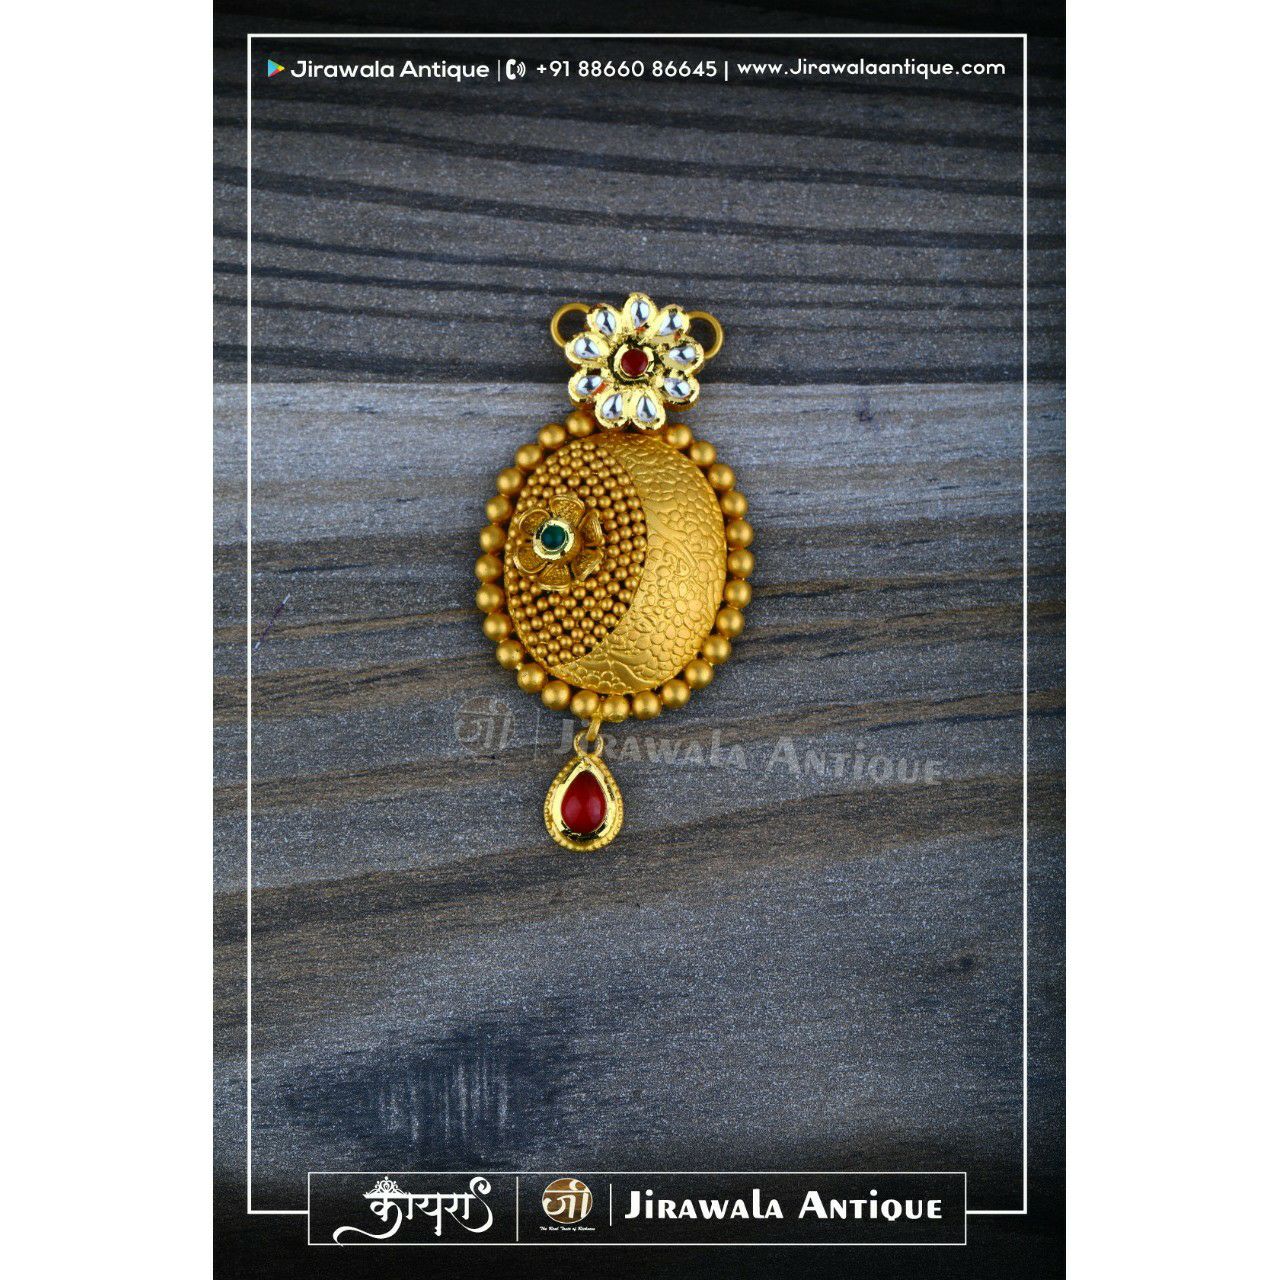 Antique jadtar 22ct 916 gold mangalsutra pendant